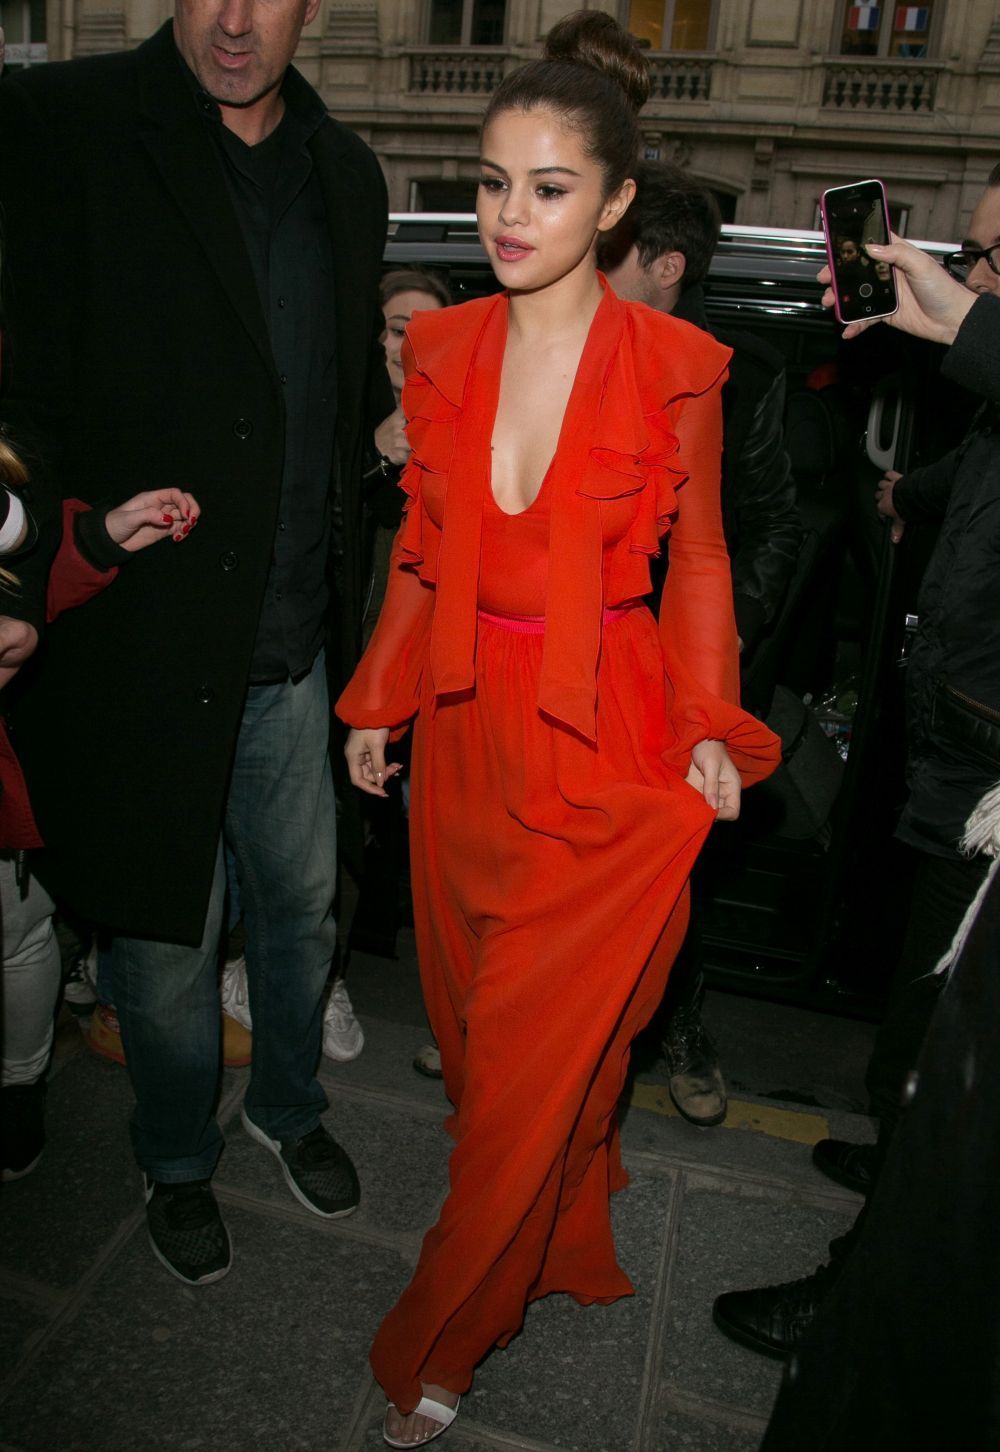 Selena Gomez, ispititoare intr-o rochie oranj, decoltata. Artista a facut furori pe strazile din Paris